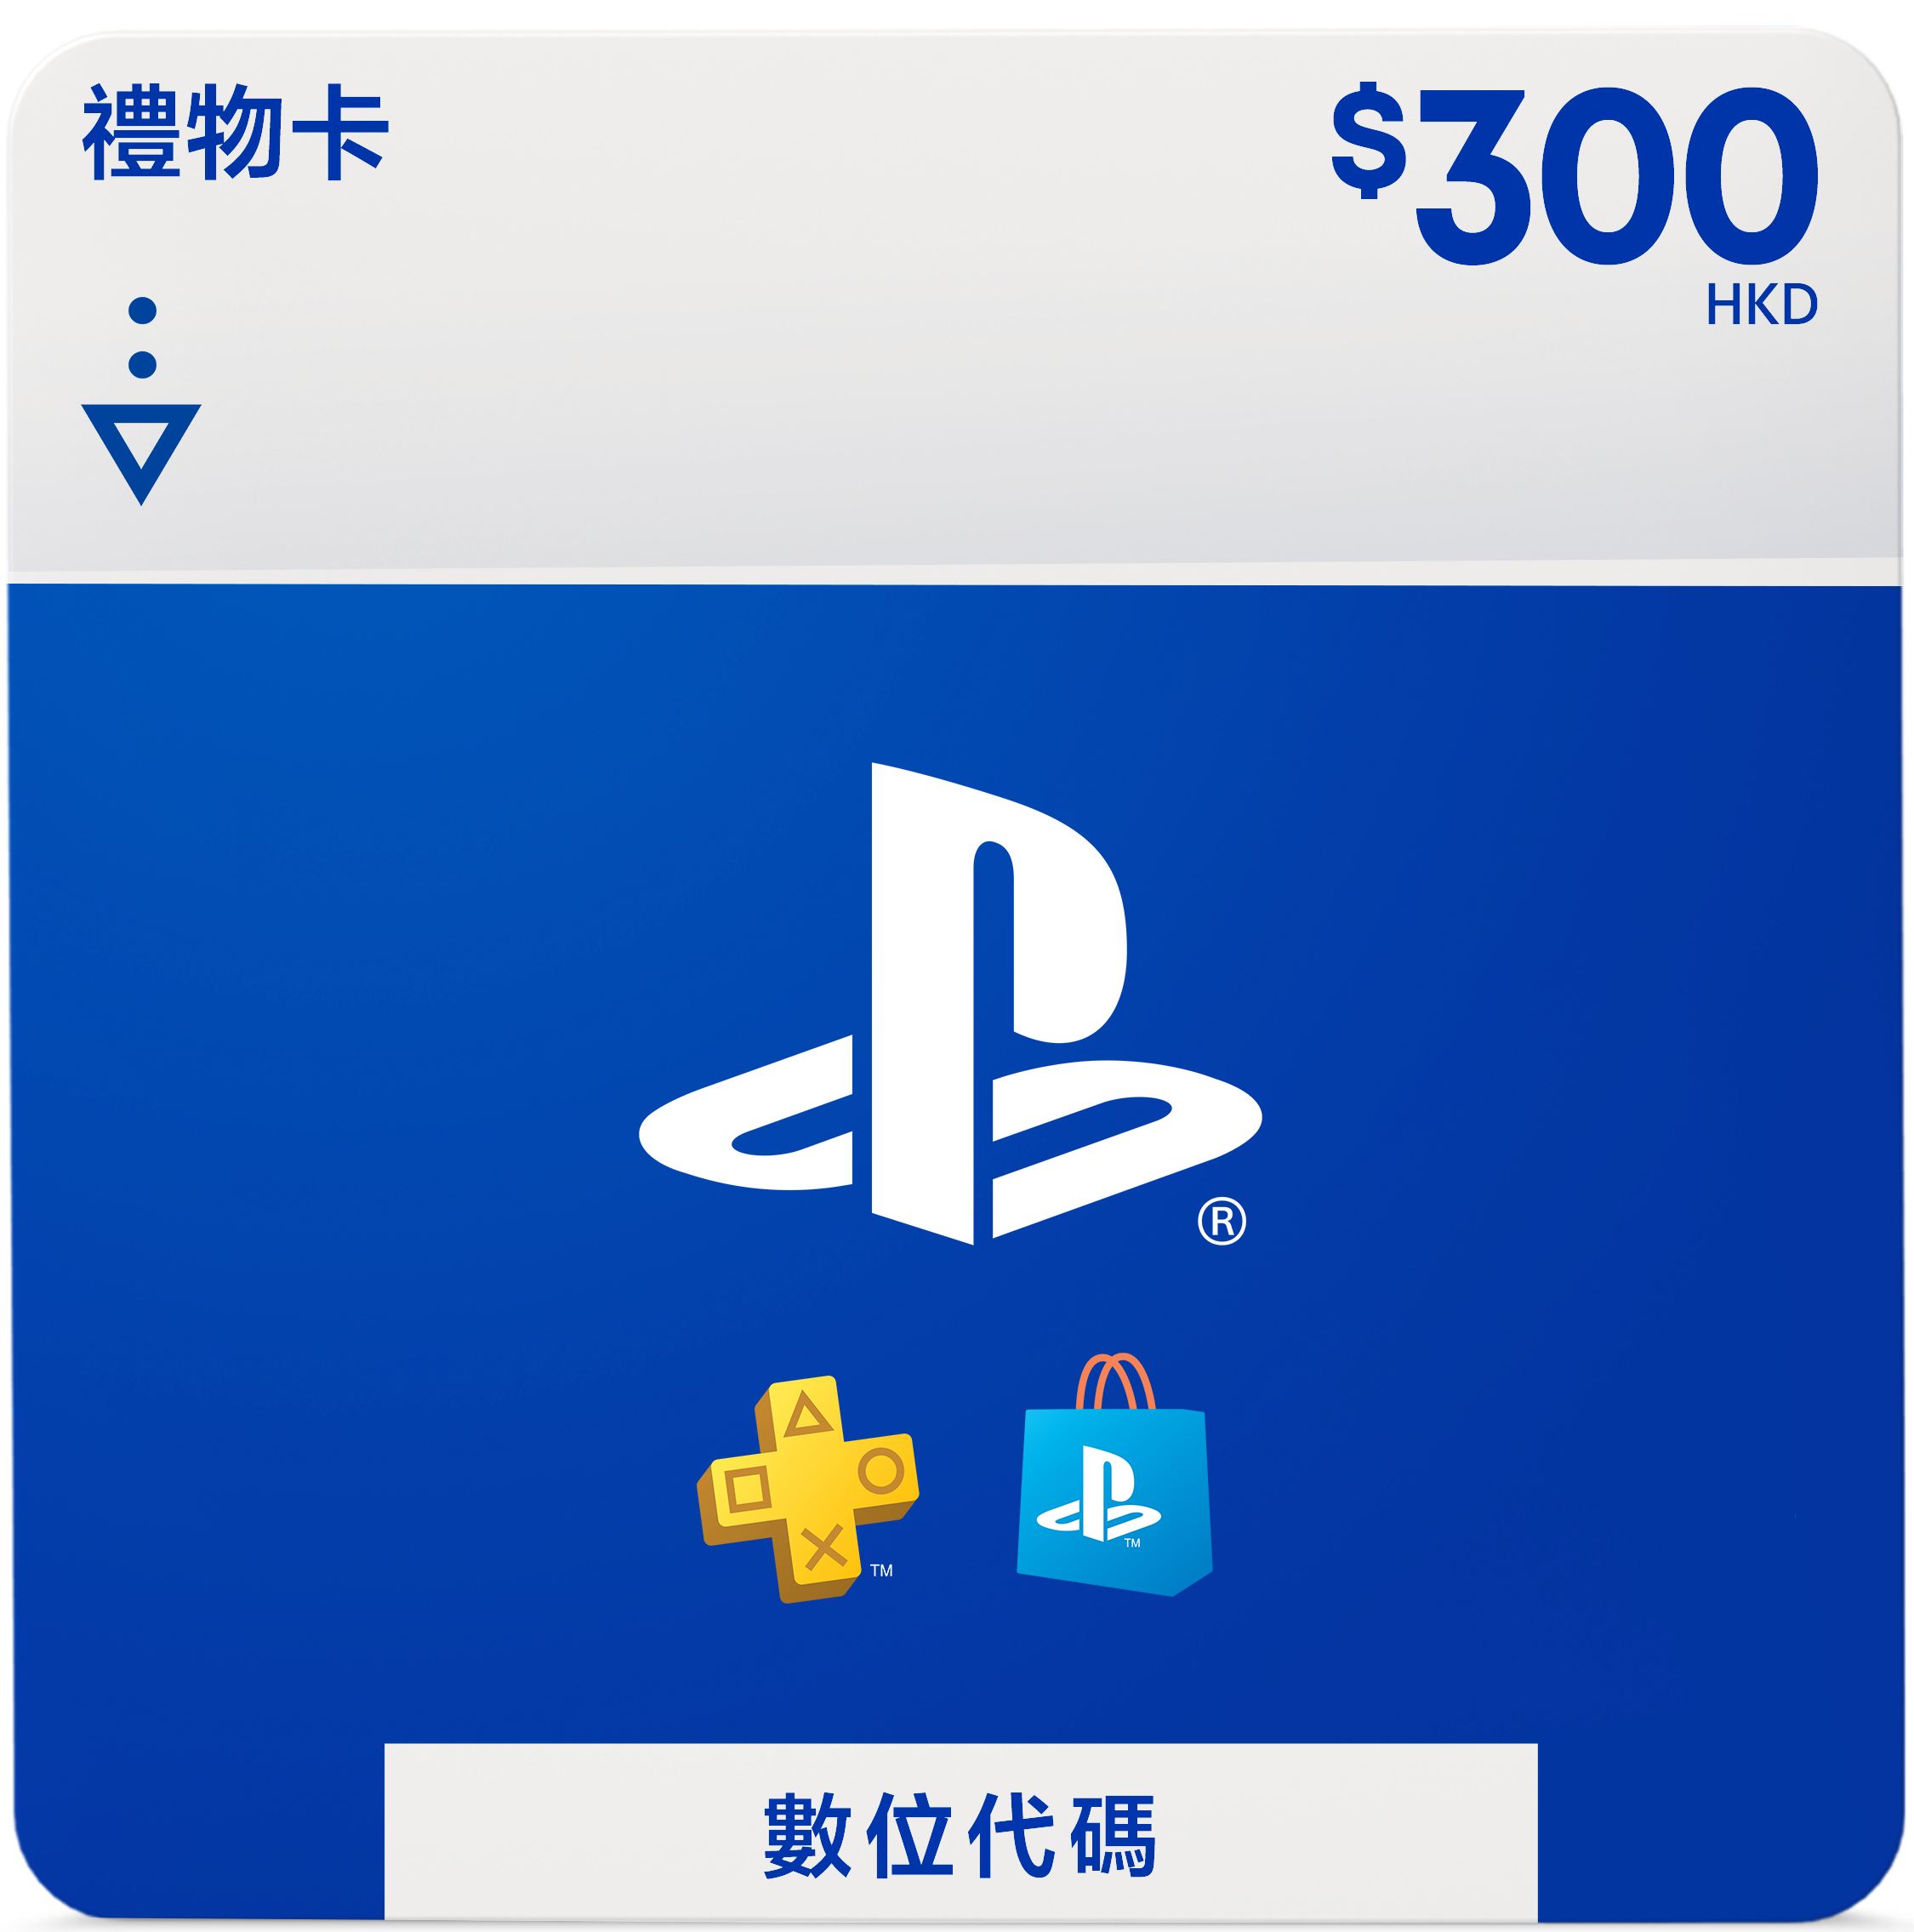 PSN HK$300